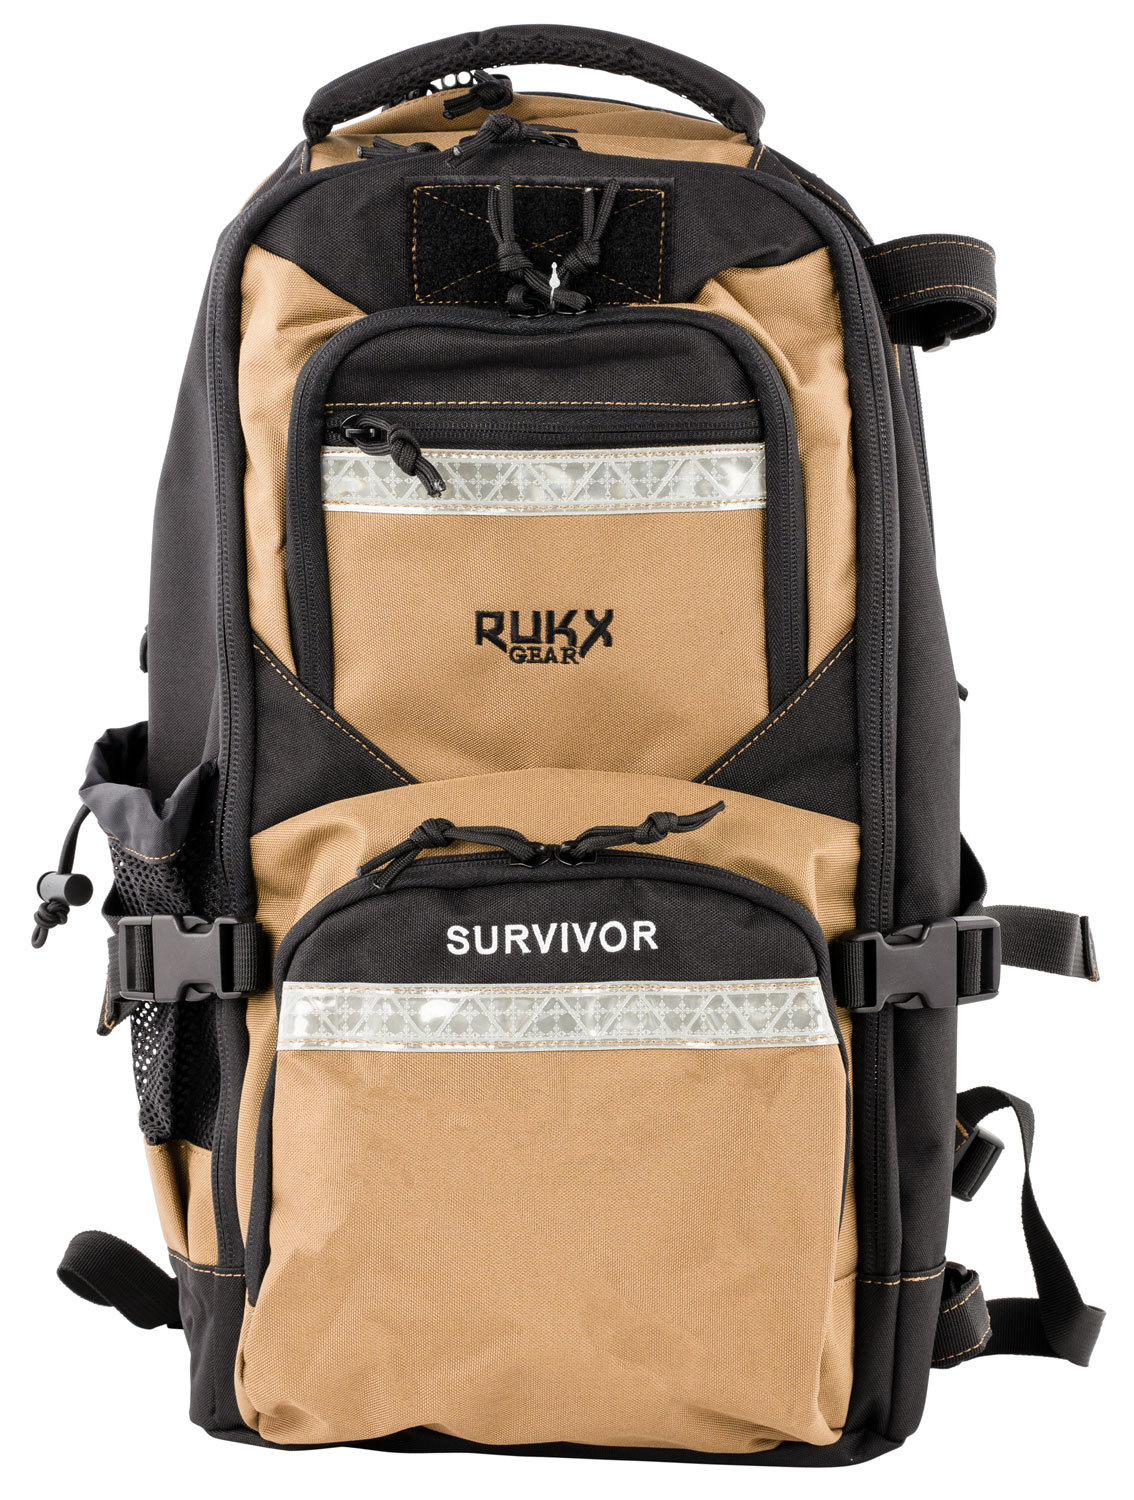 ATI, Rukx Gear, Survivor Backpack, Tan